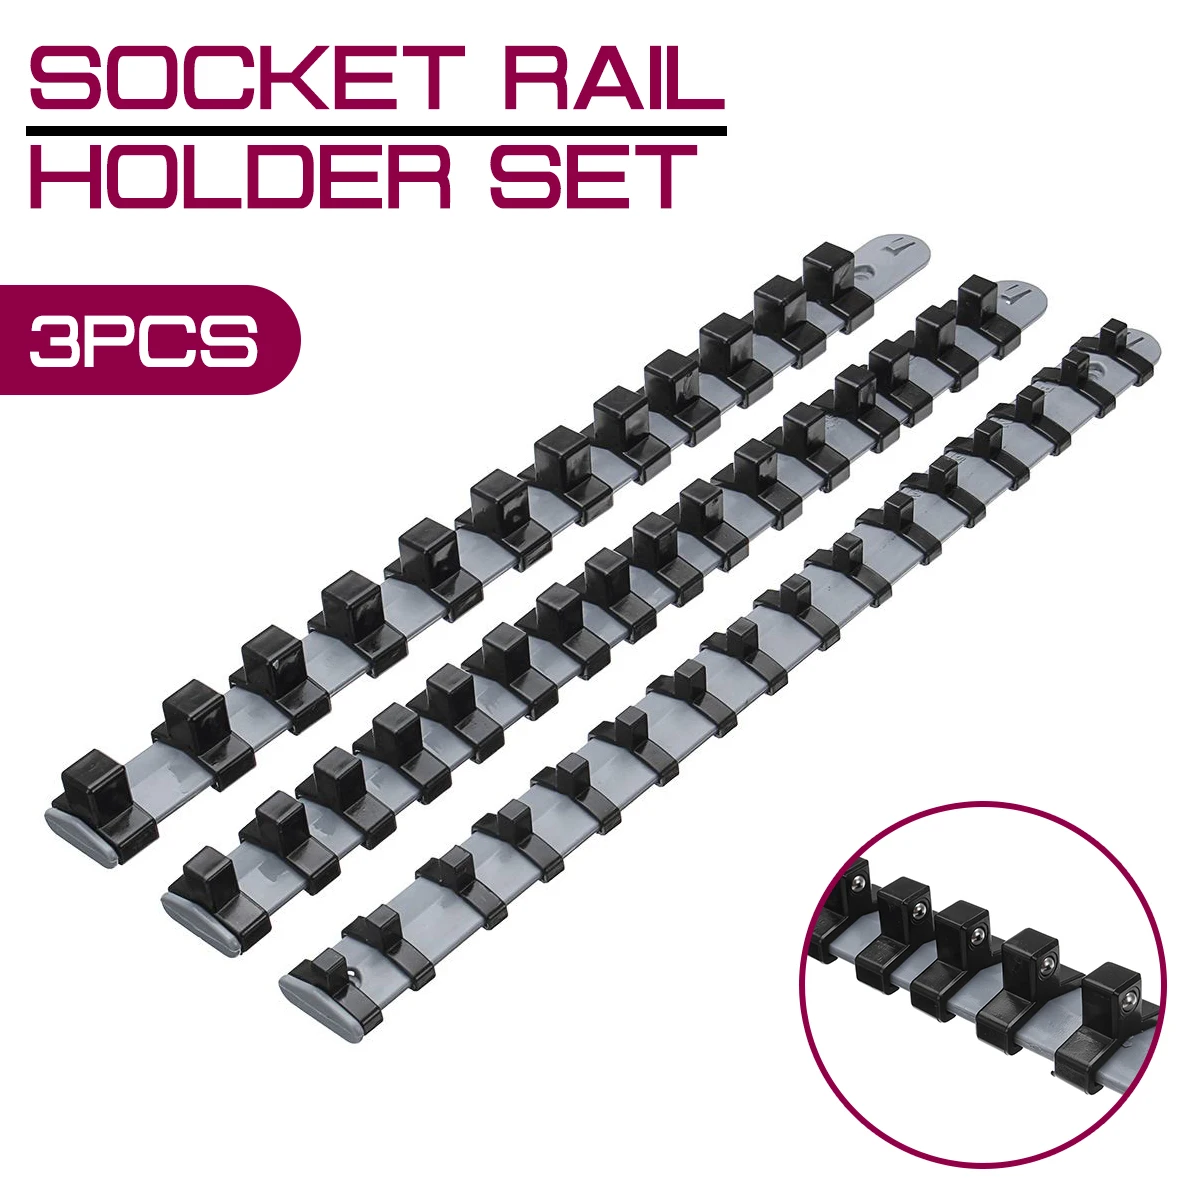 

3PCS/SET Wrench 1/4" 3/8" 1/2" Wall Organizer Socket Rack Storage Drive Rail Tray Holder Shelf Stand 34cm